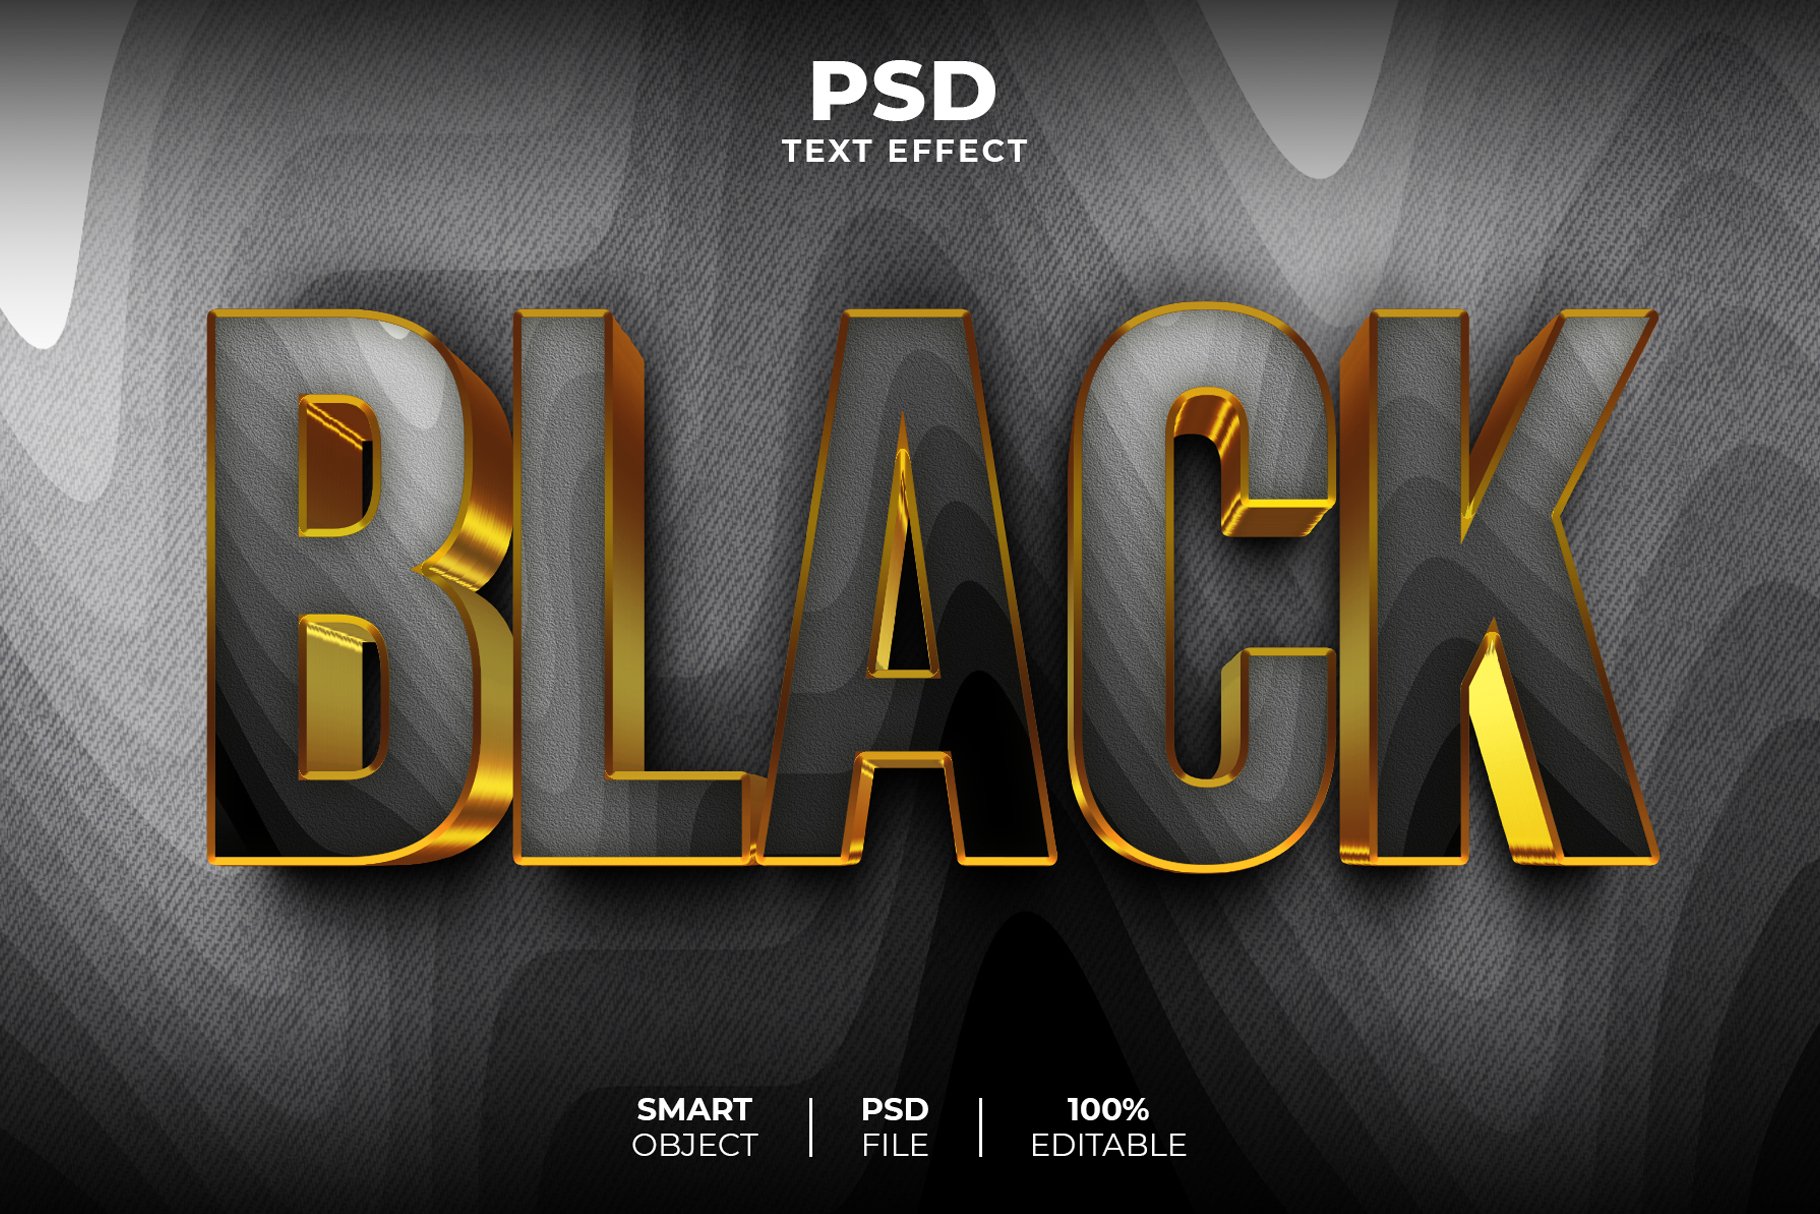 Black 3D editable text effectcover image.